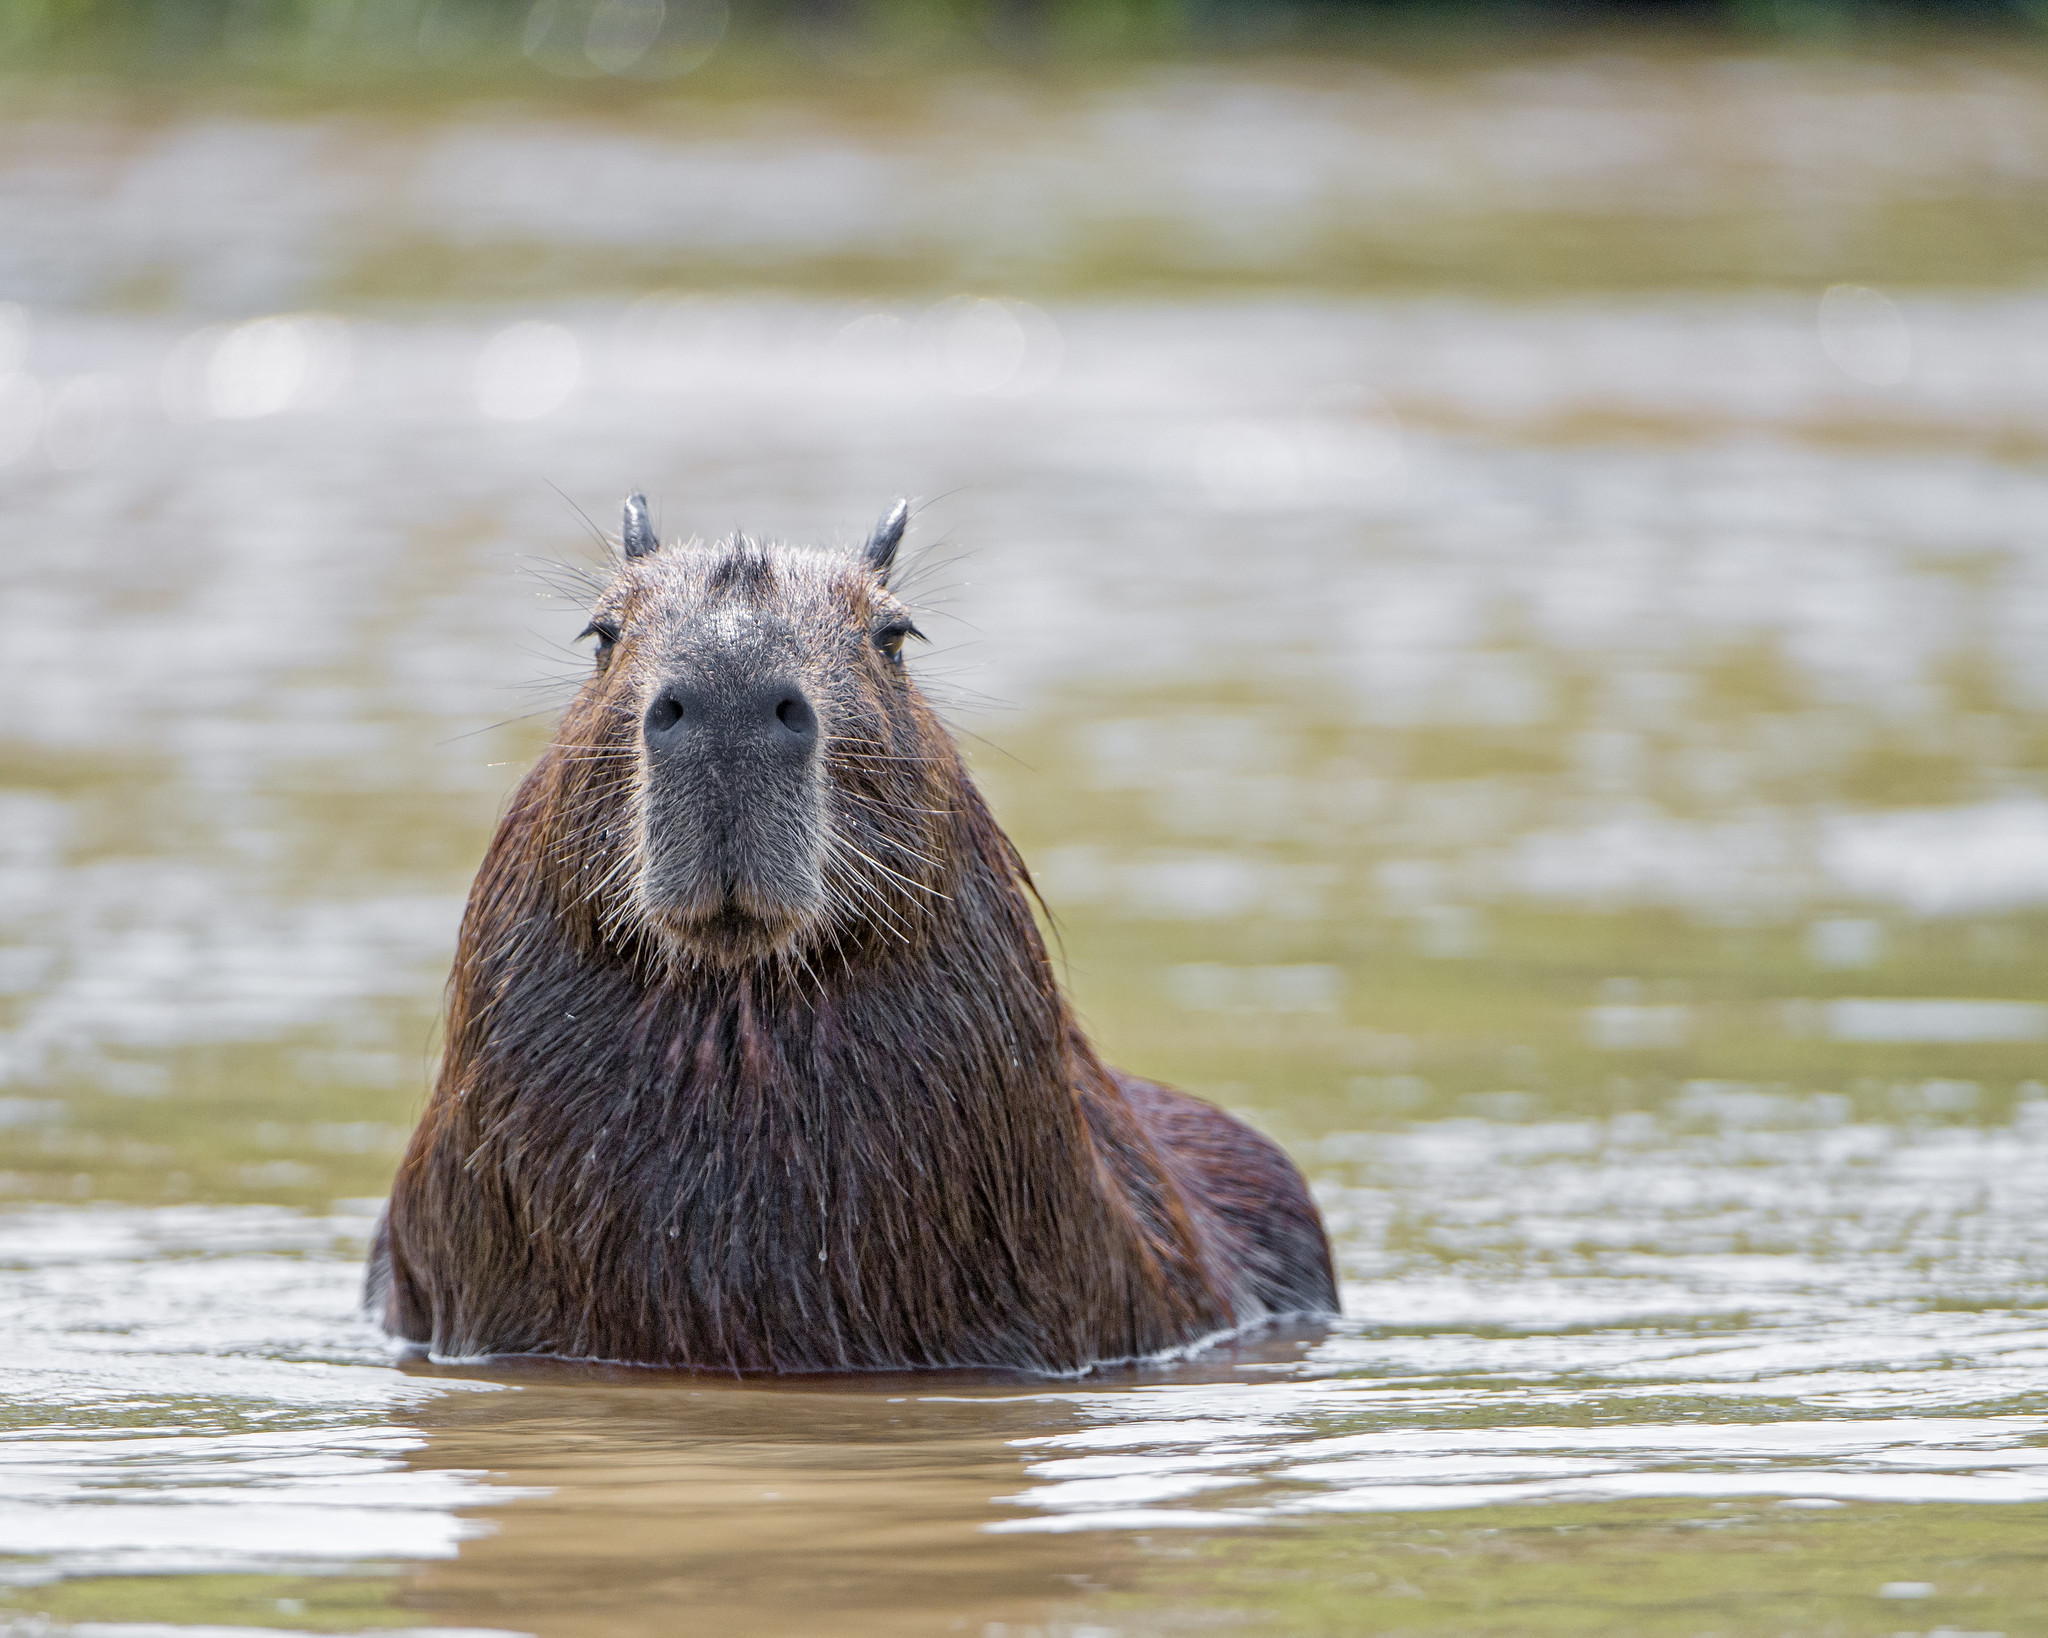 Capybara: Meet the World's Largest Rodent